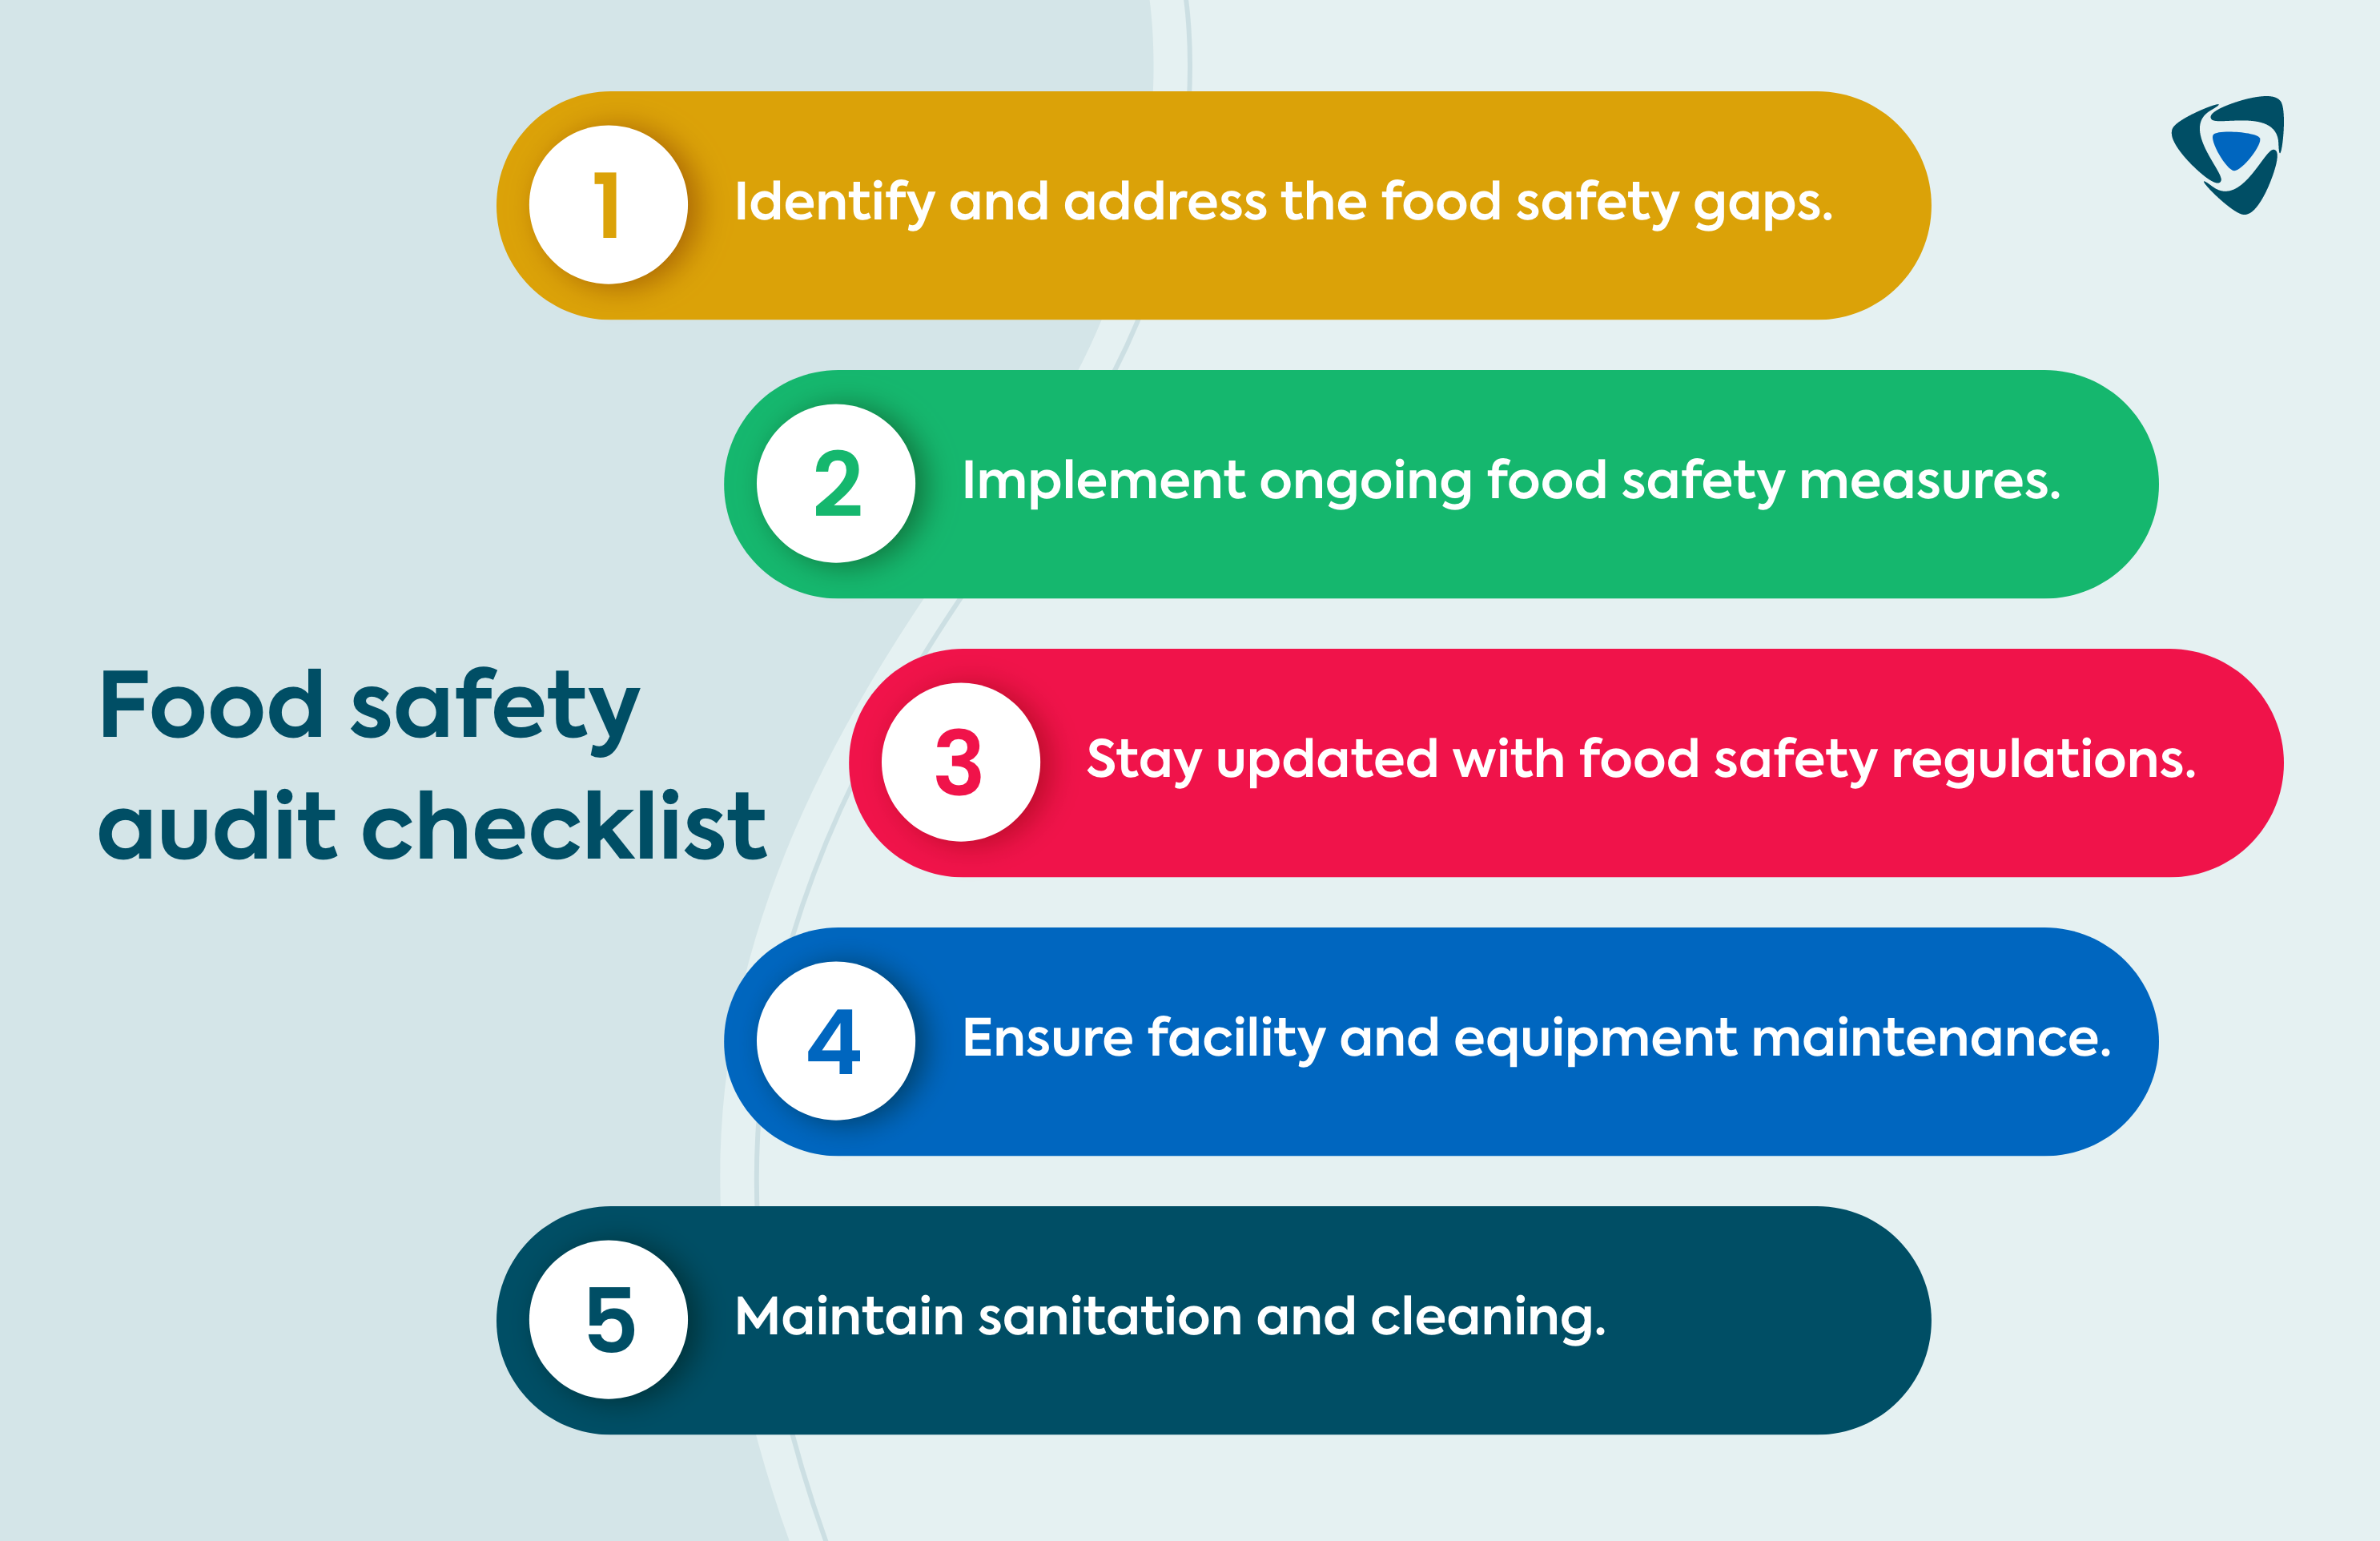 Food safety audit checklist